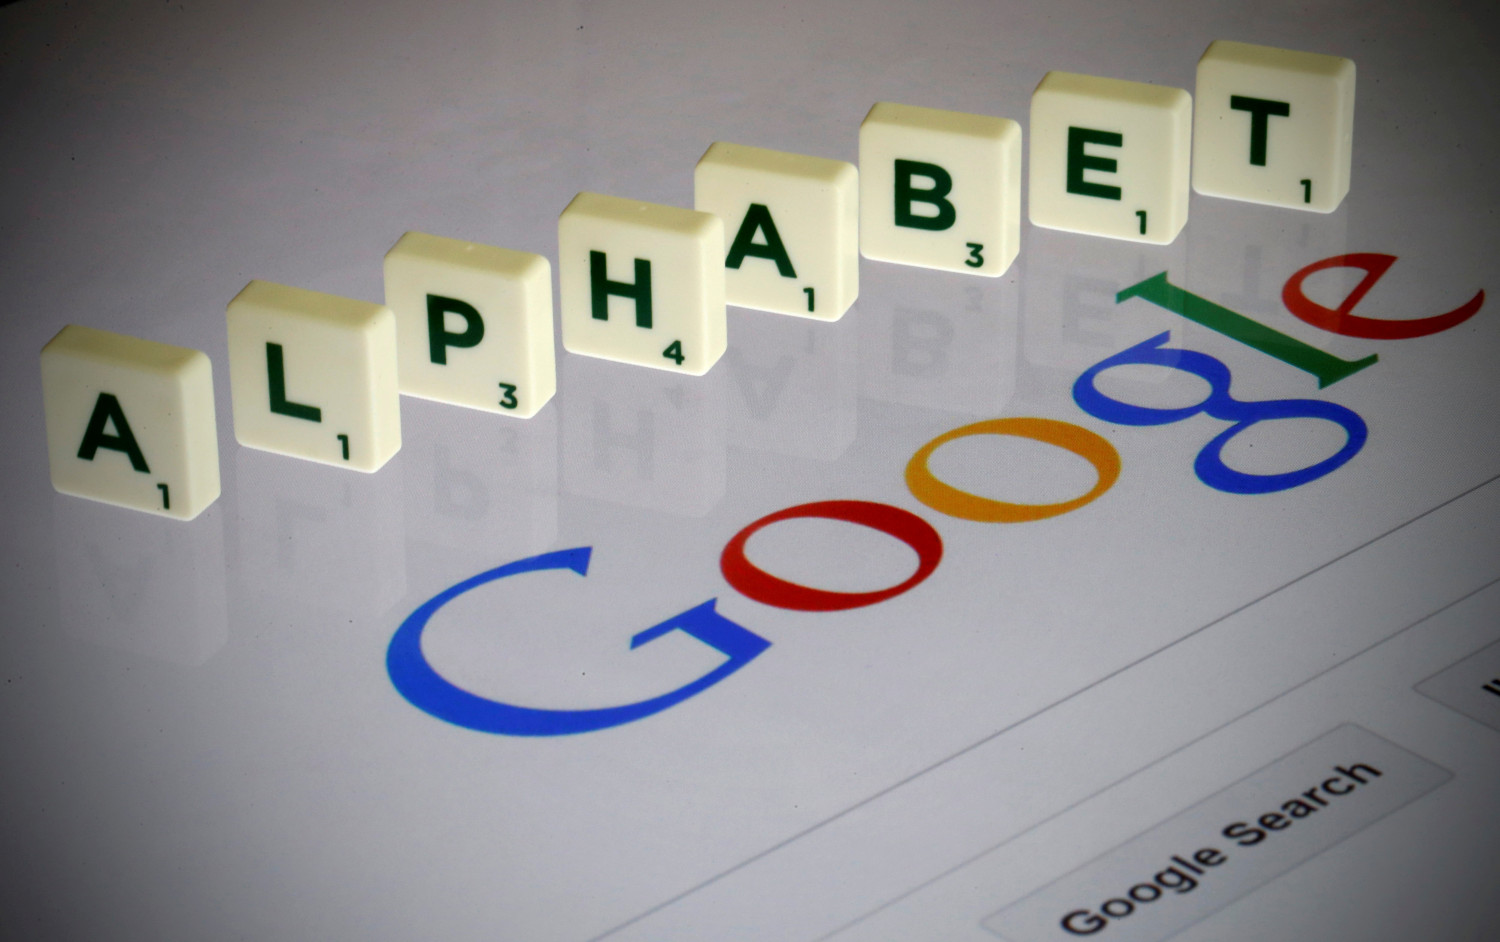 Alphabet (Google) se dispara tras sus cuentas: bate previsiones e inicia dividendos